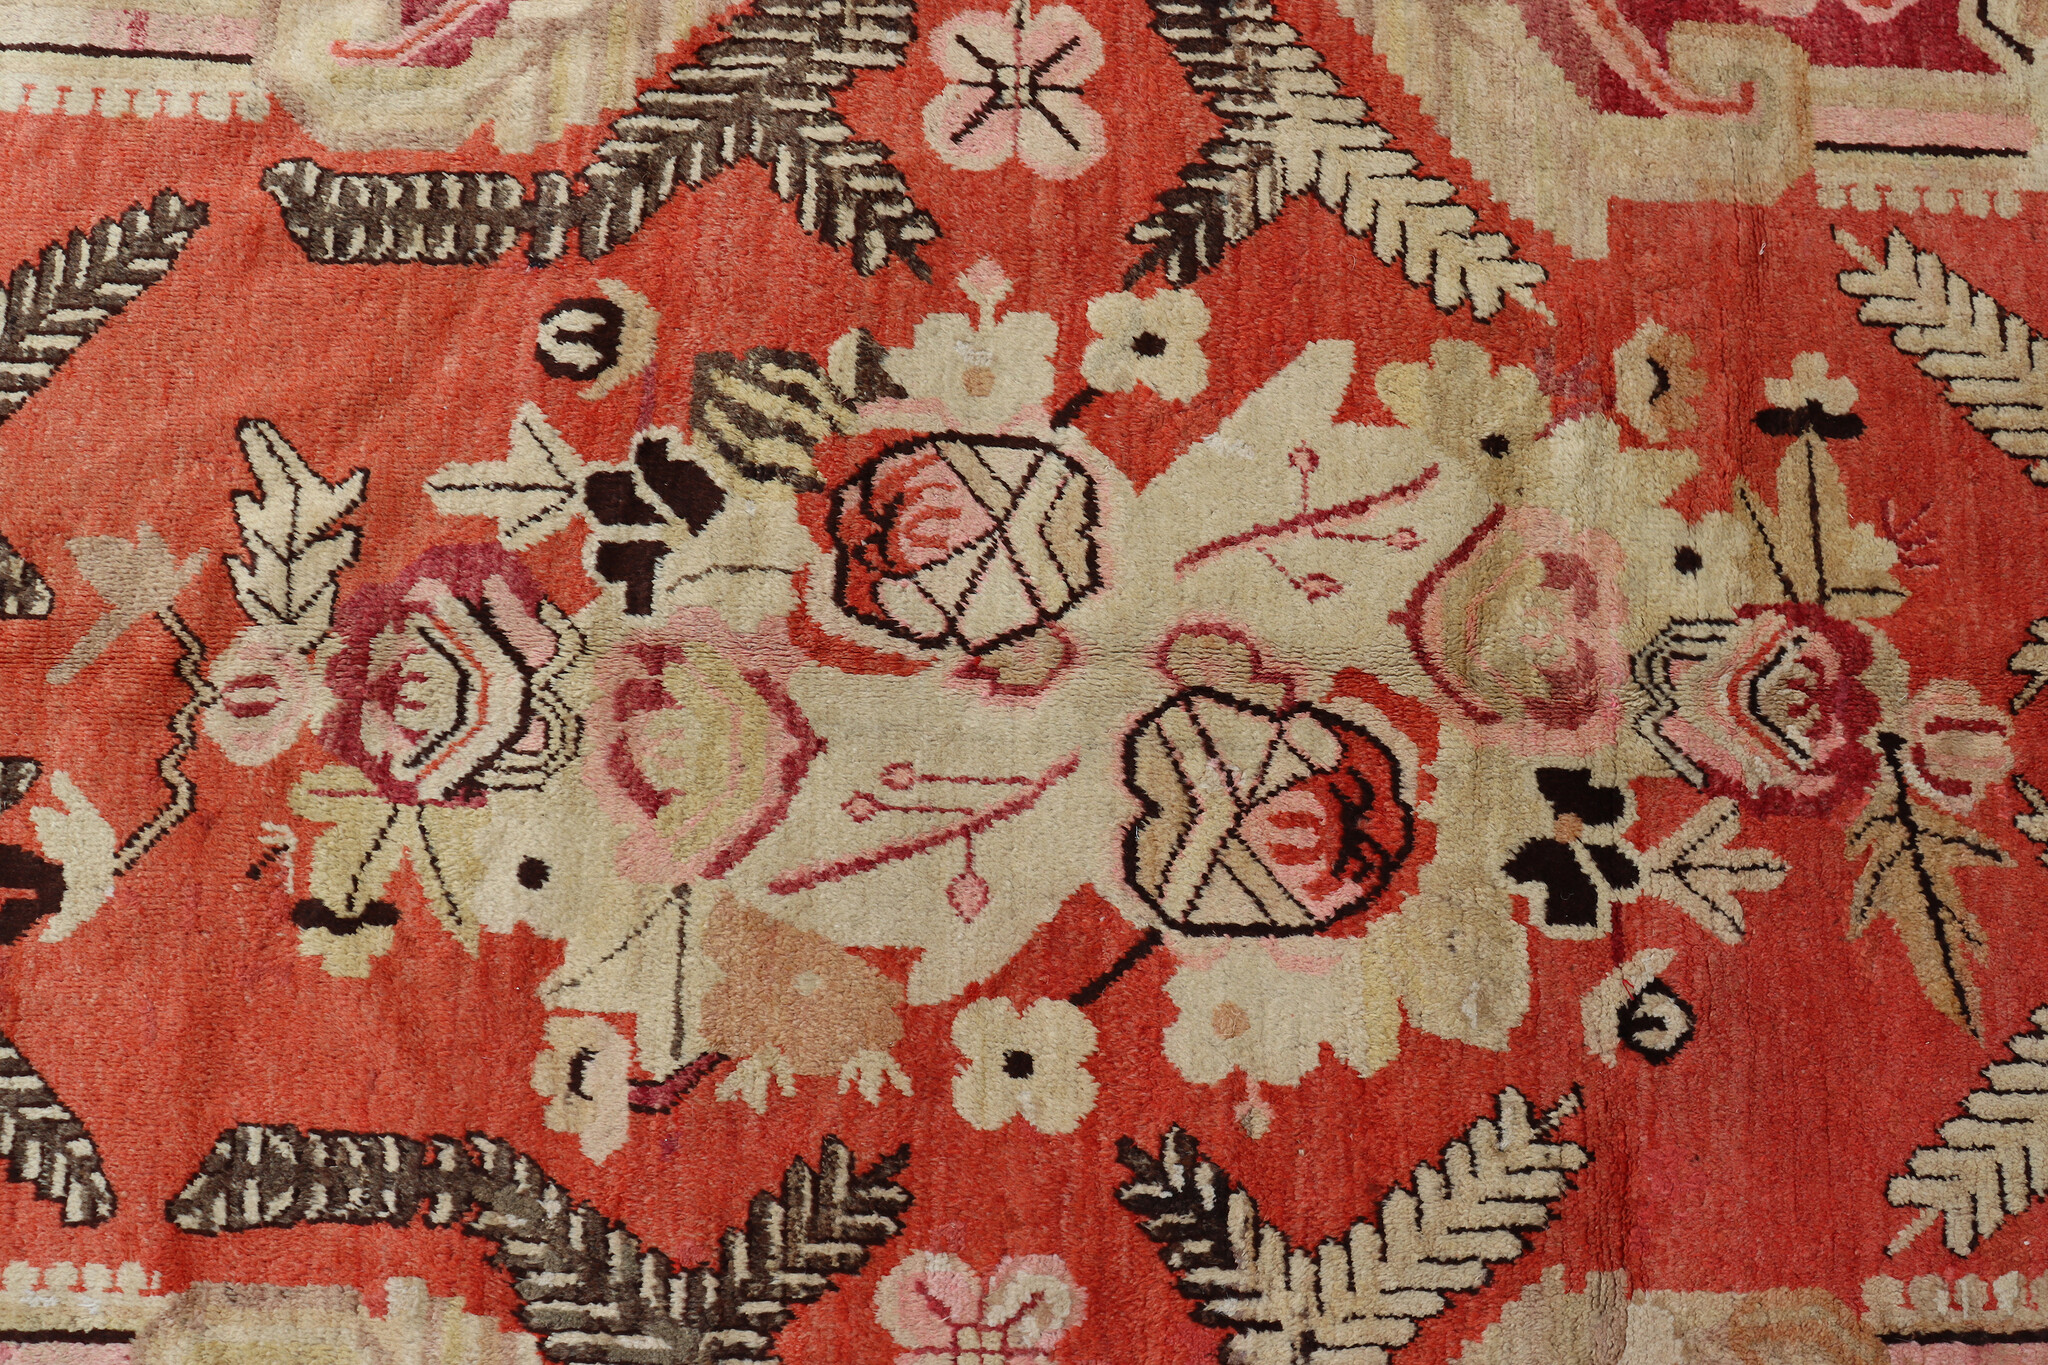 215x140 cm original antique Khotan Samarkand rug Chinese Turkestan hand knotted carpet No:23B